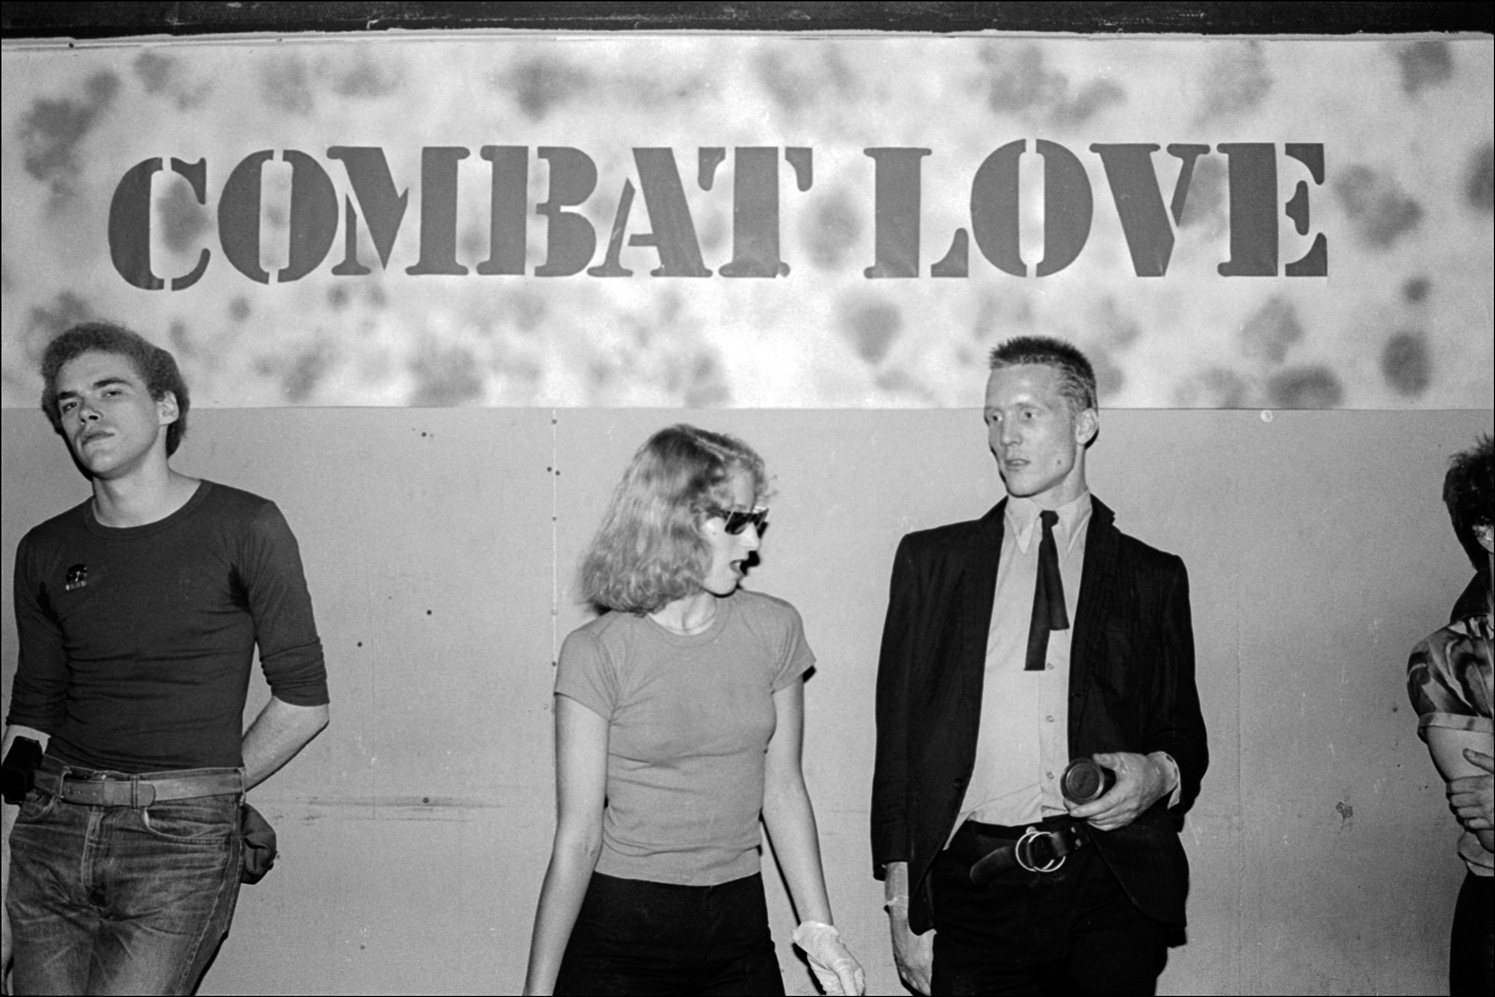 Combat Love Mudd Club Banner